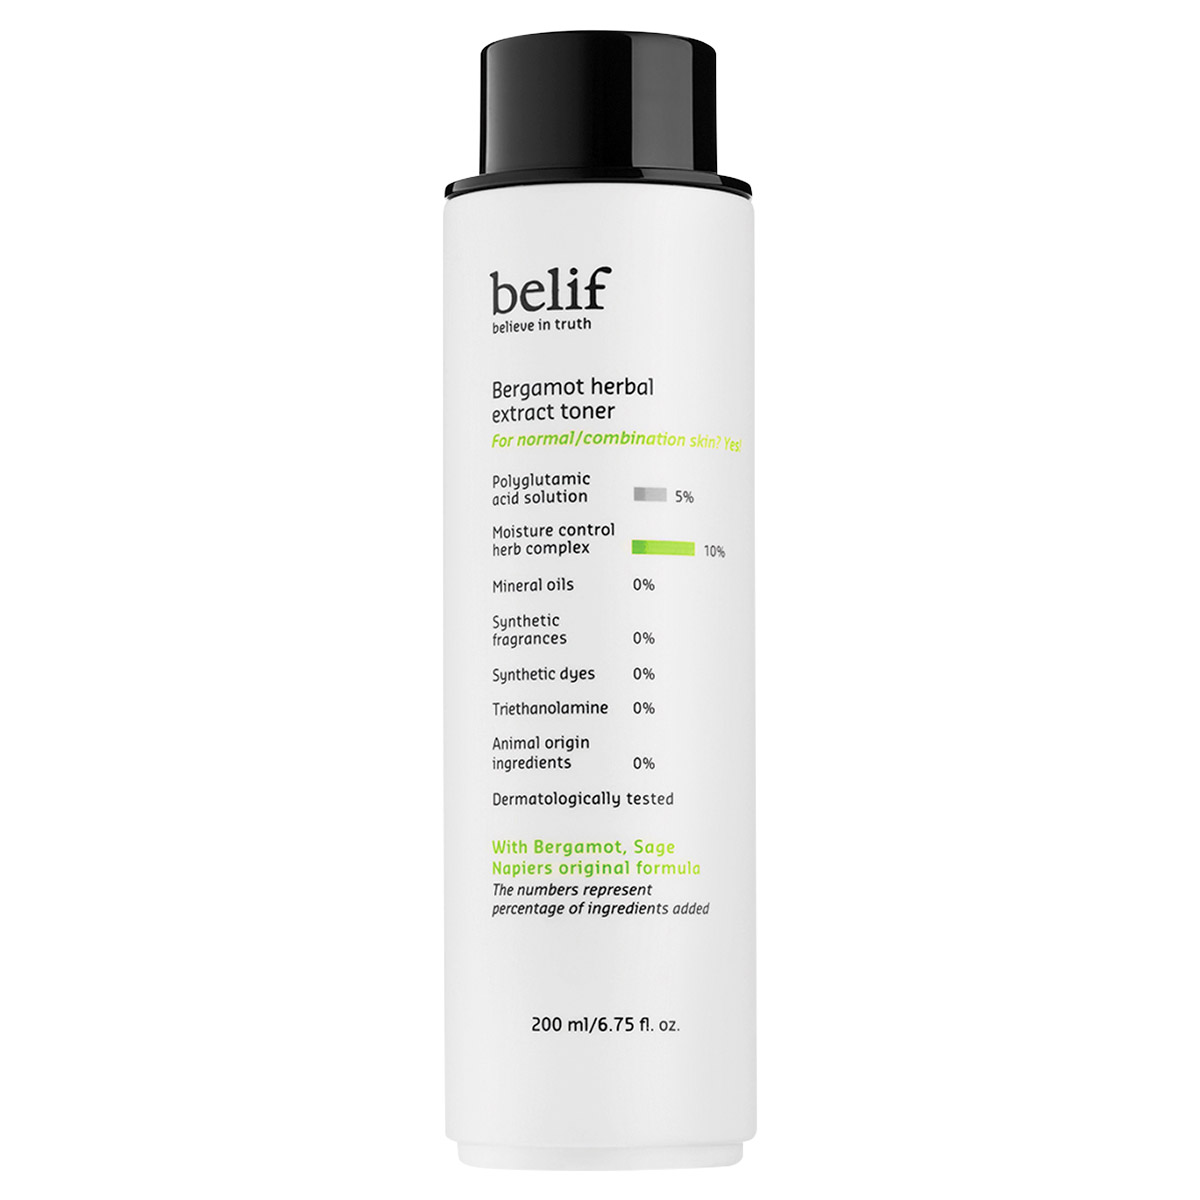 belif Bergamot Herbal Extract Toner Step 4 Korean Skin Care Routine